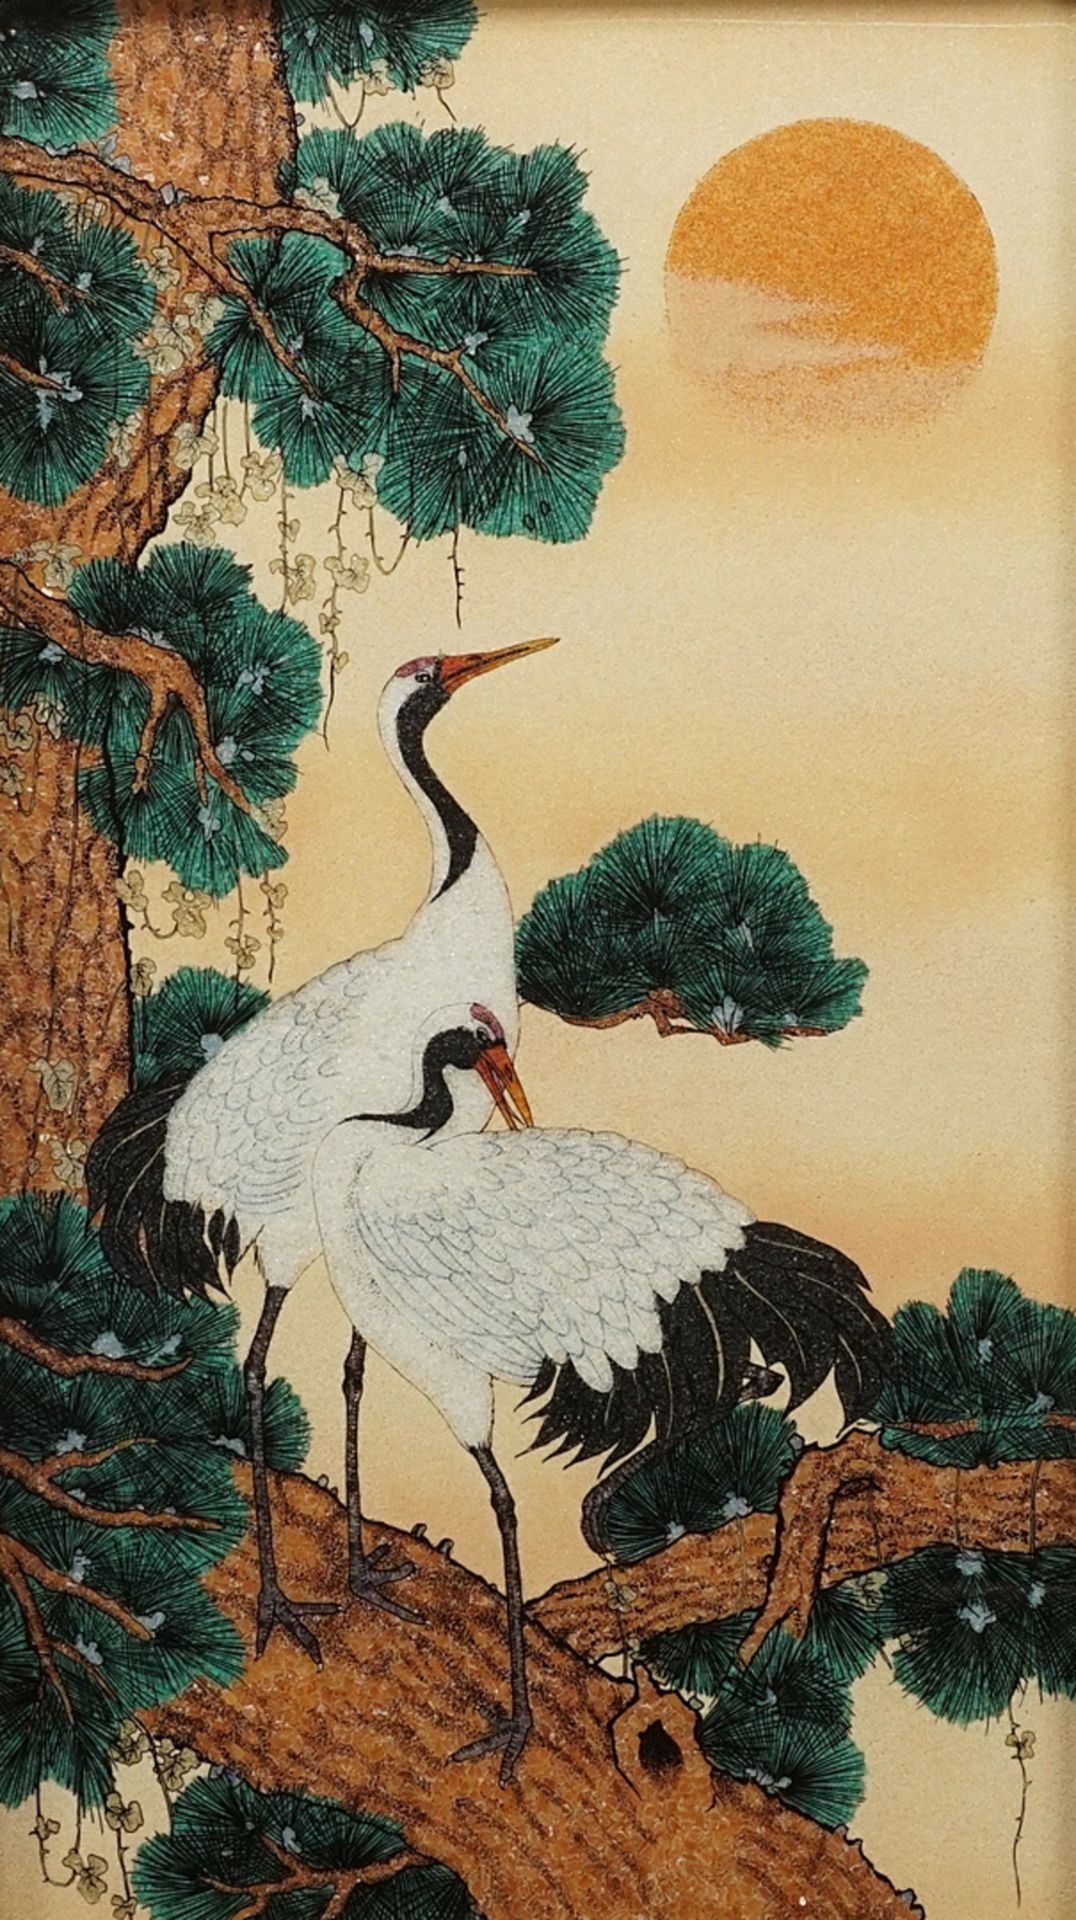 Gemstone collage "Cranes", 20th century